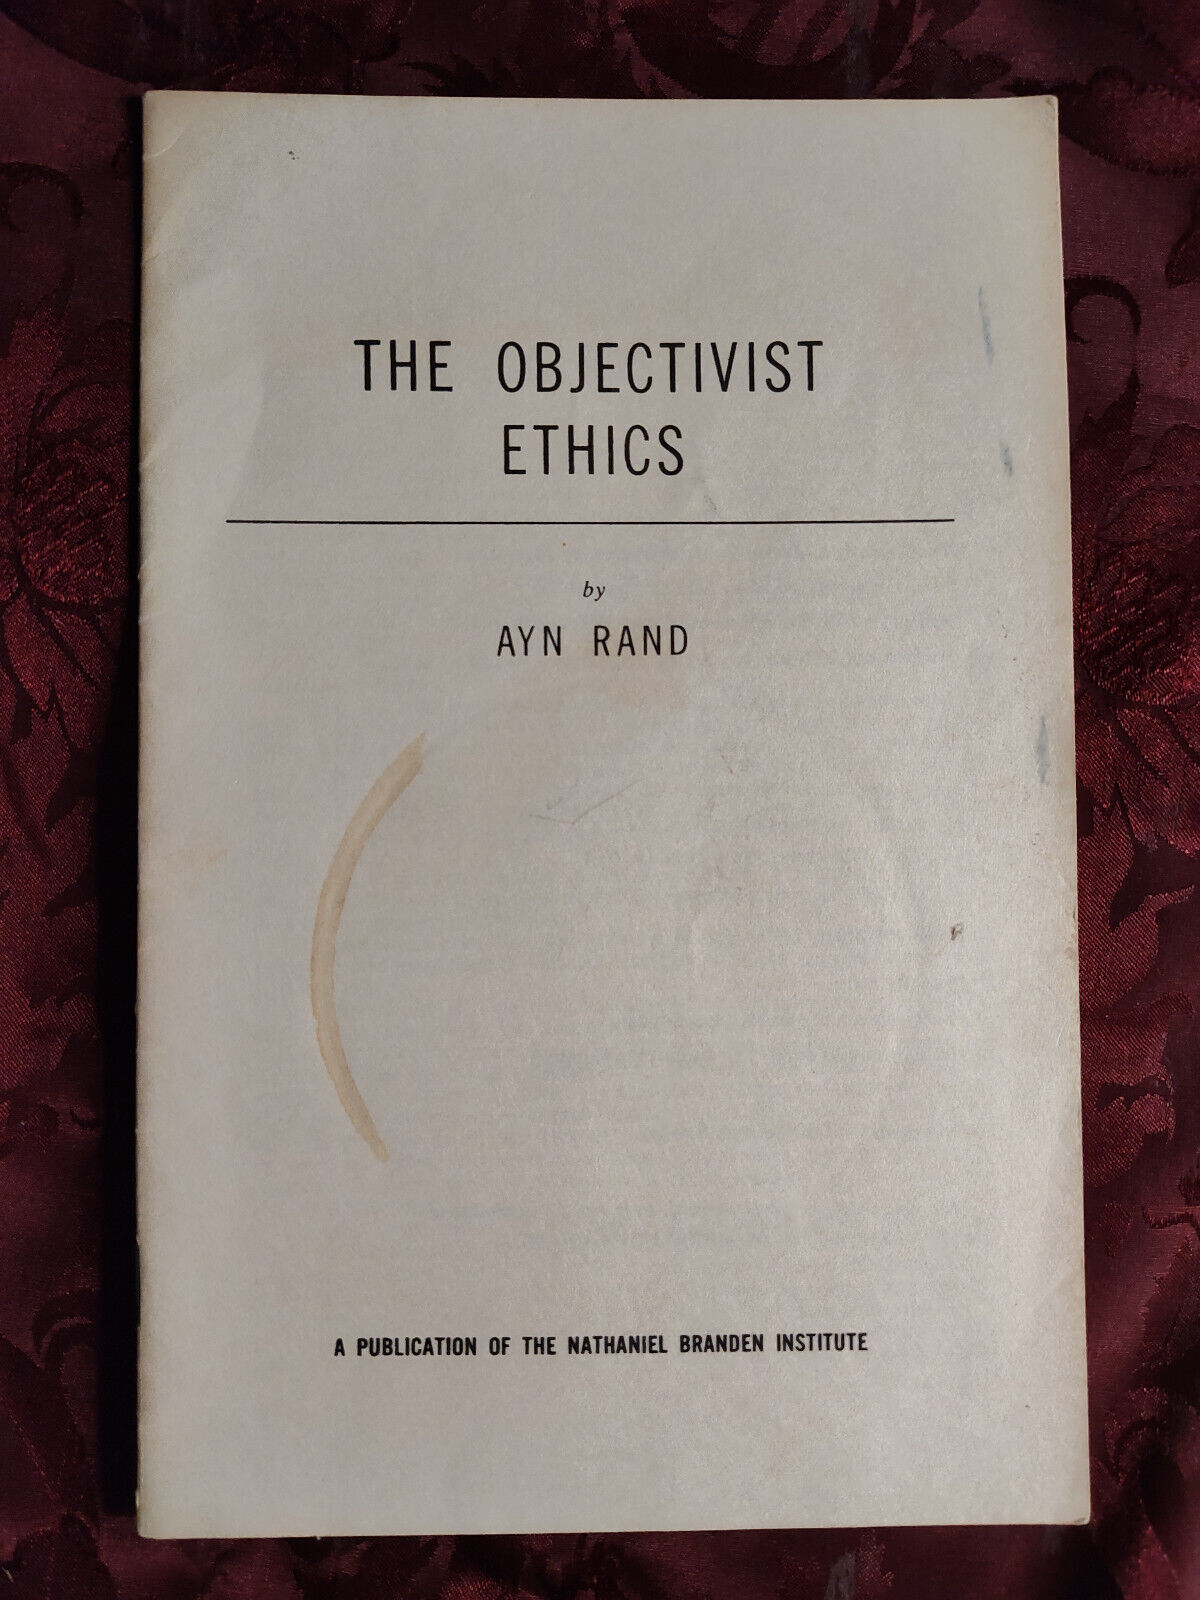 RARE Ayn Rand Objectivist Pamphlet The Objectivist Ethics NBI